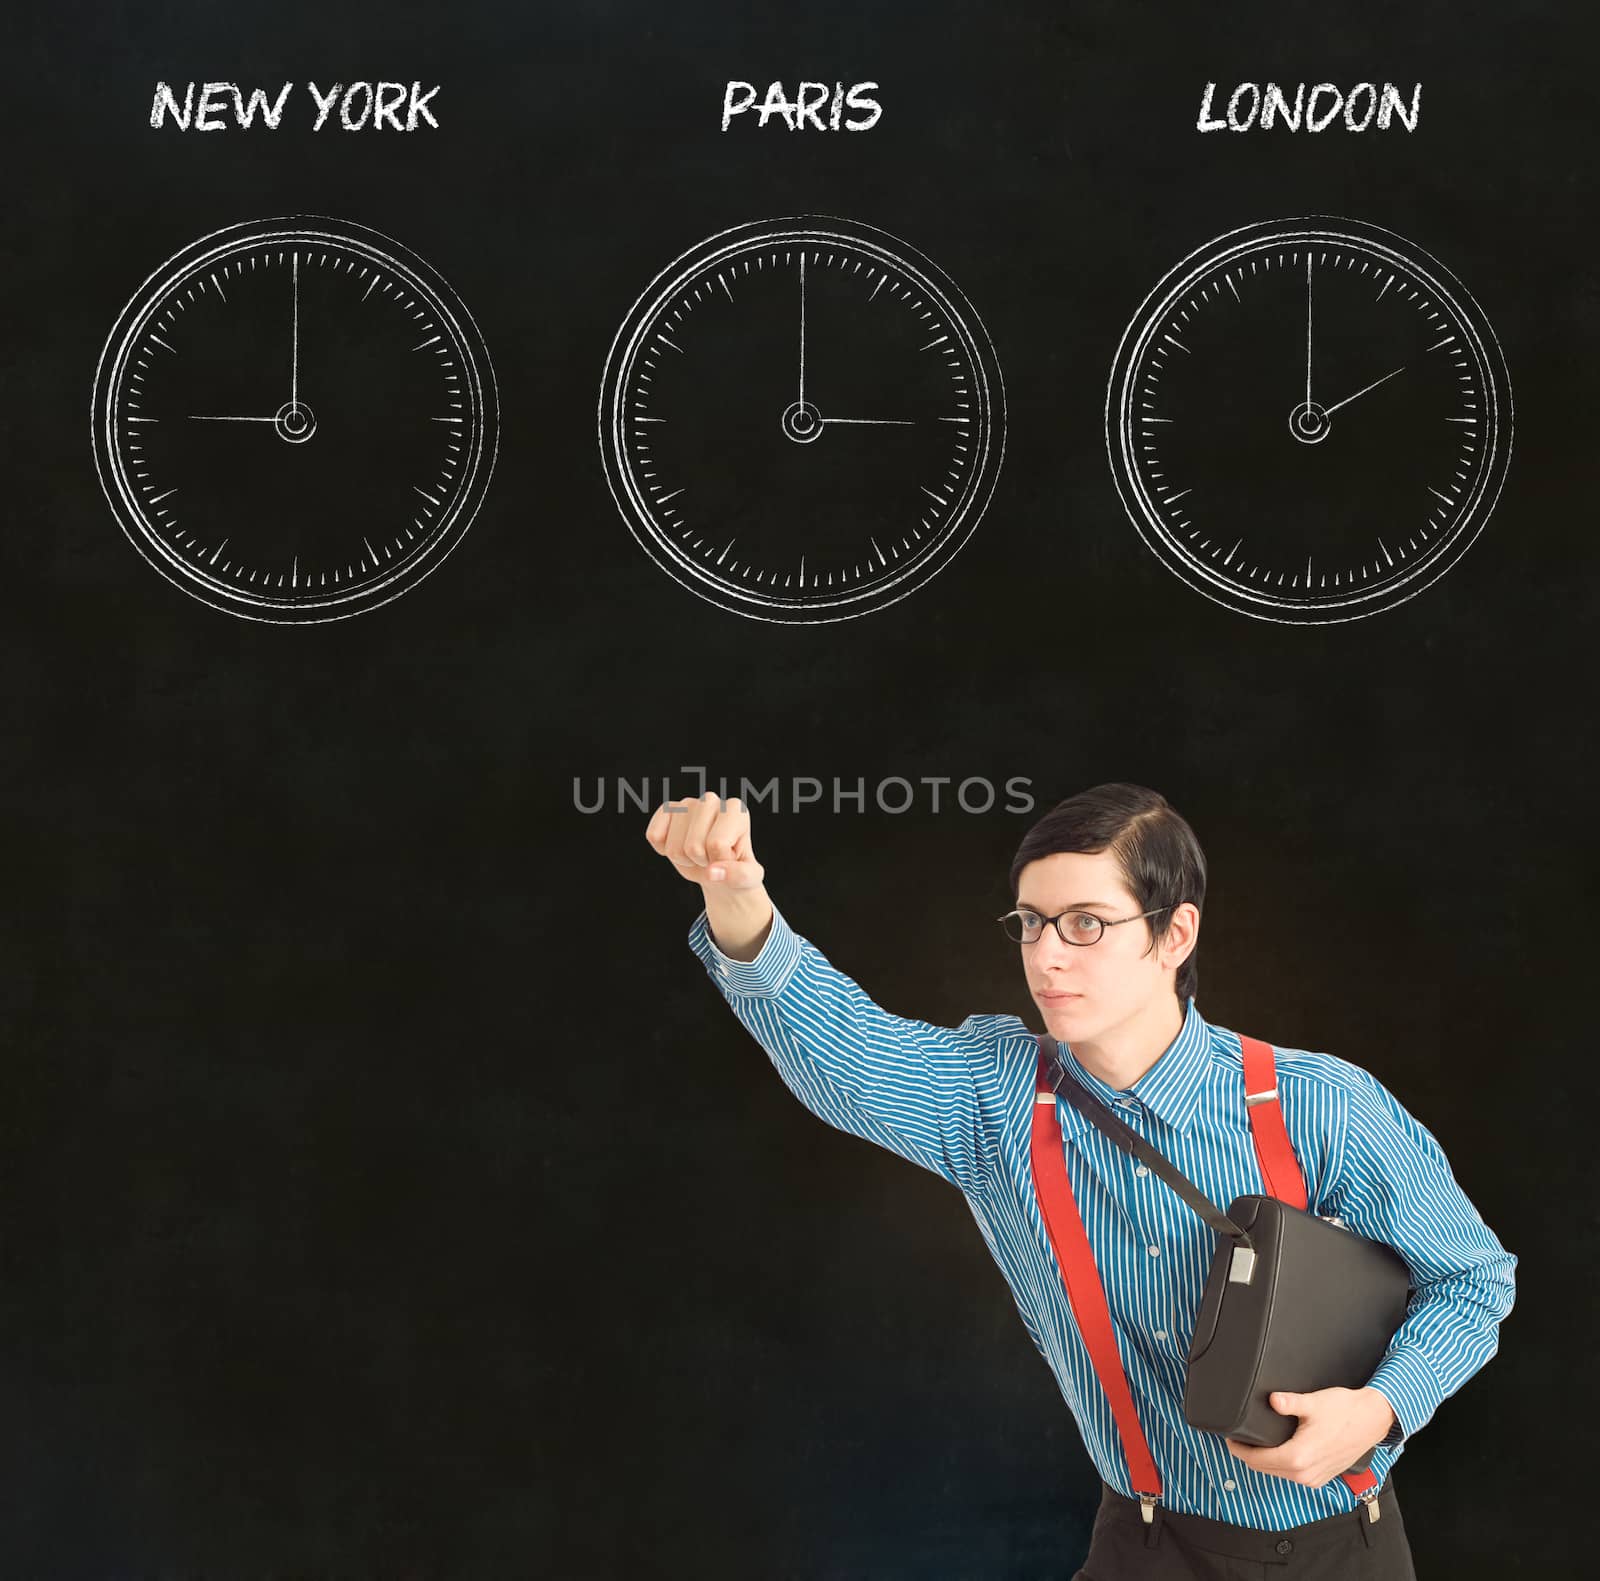 Nerd geek businessman with chalk time difference clocks on blackboard background